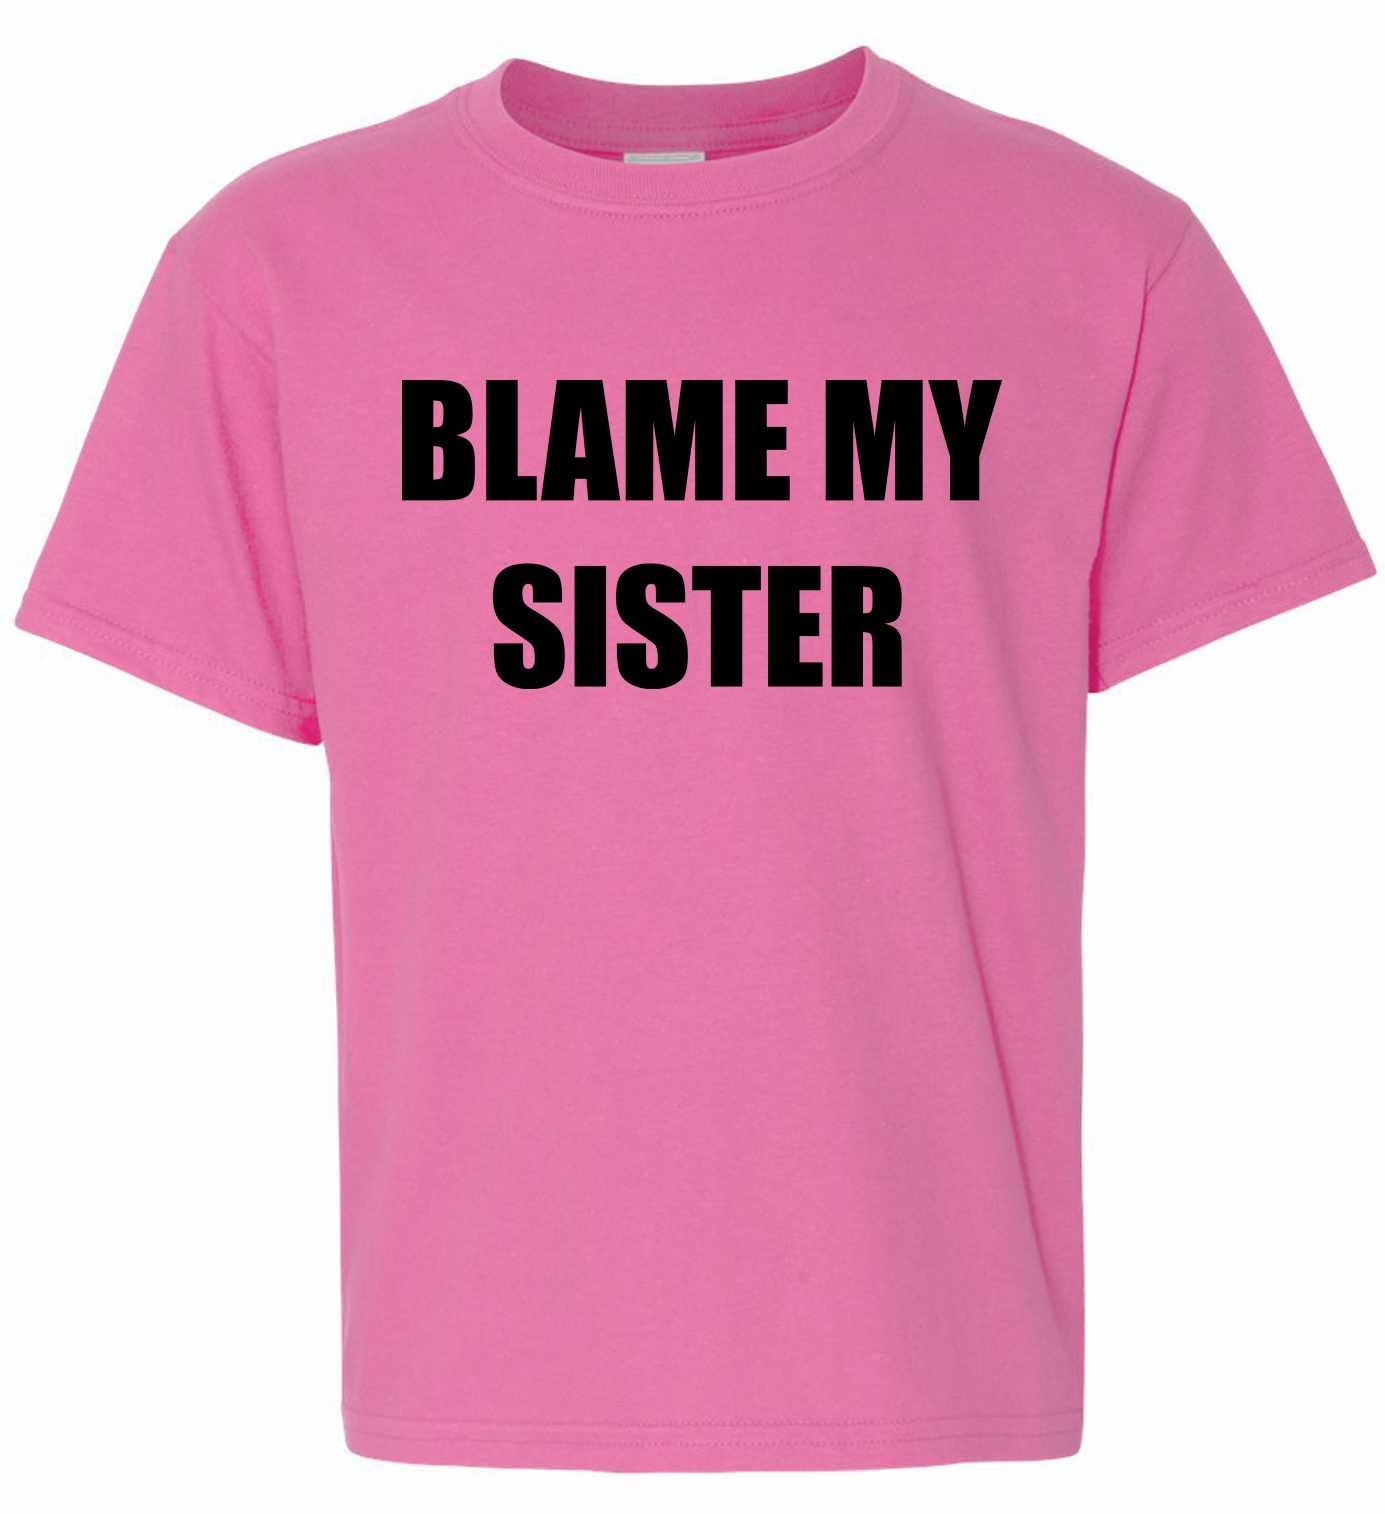 Blame My Sister on Kids T-Shirt (#754-201)